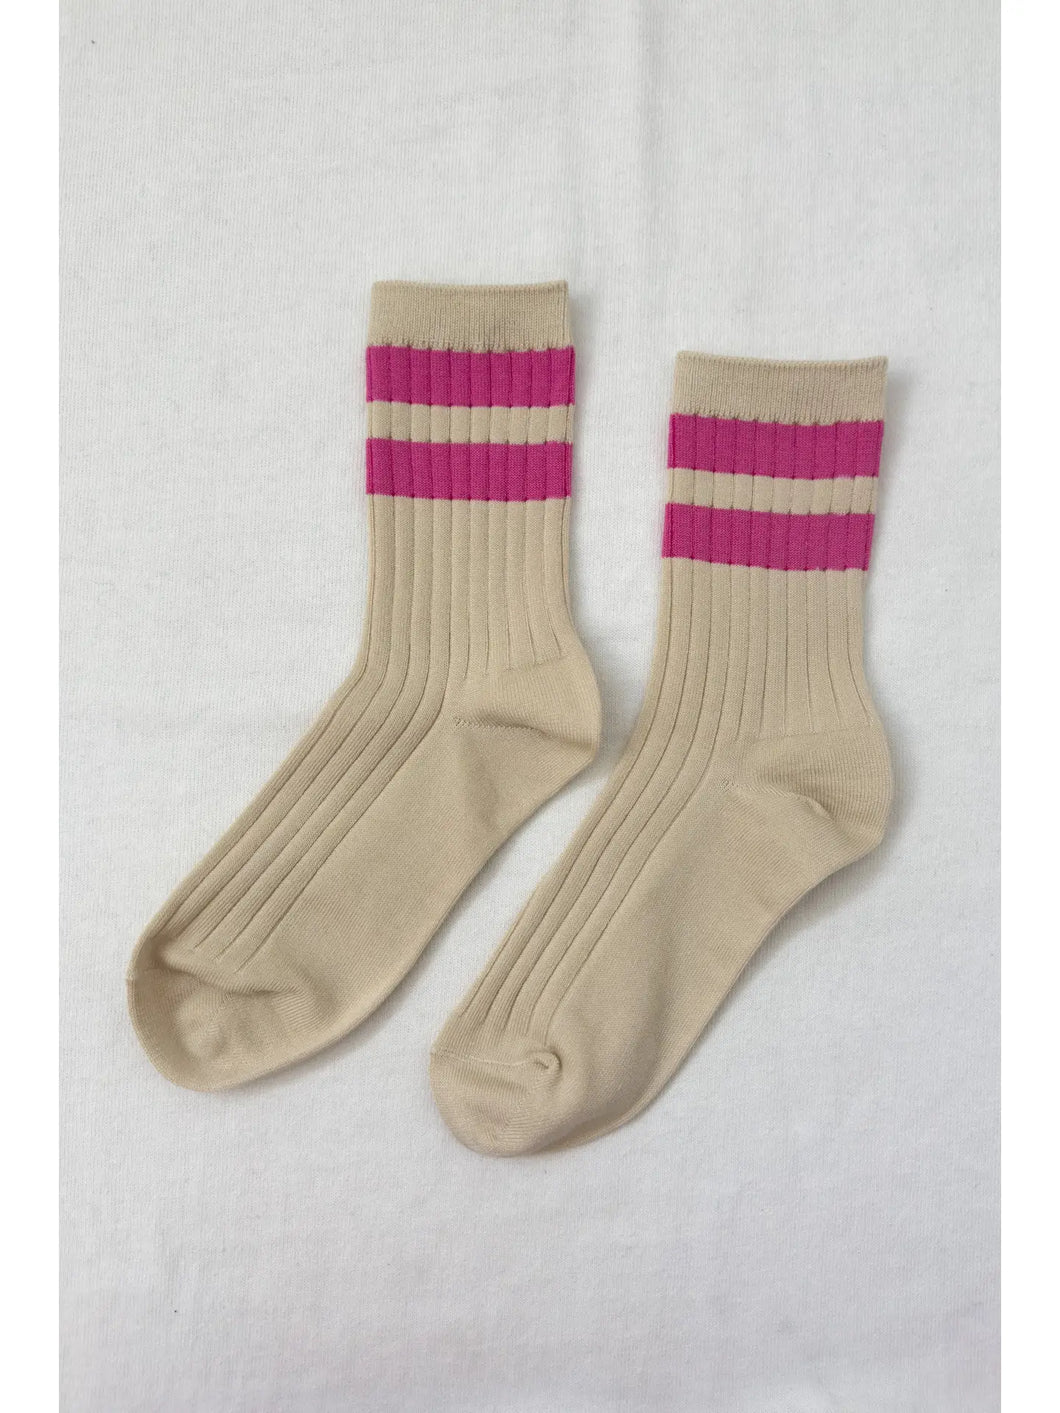 Her Socks -  Pink Taffy